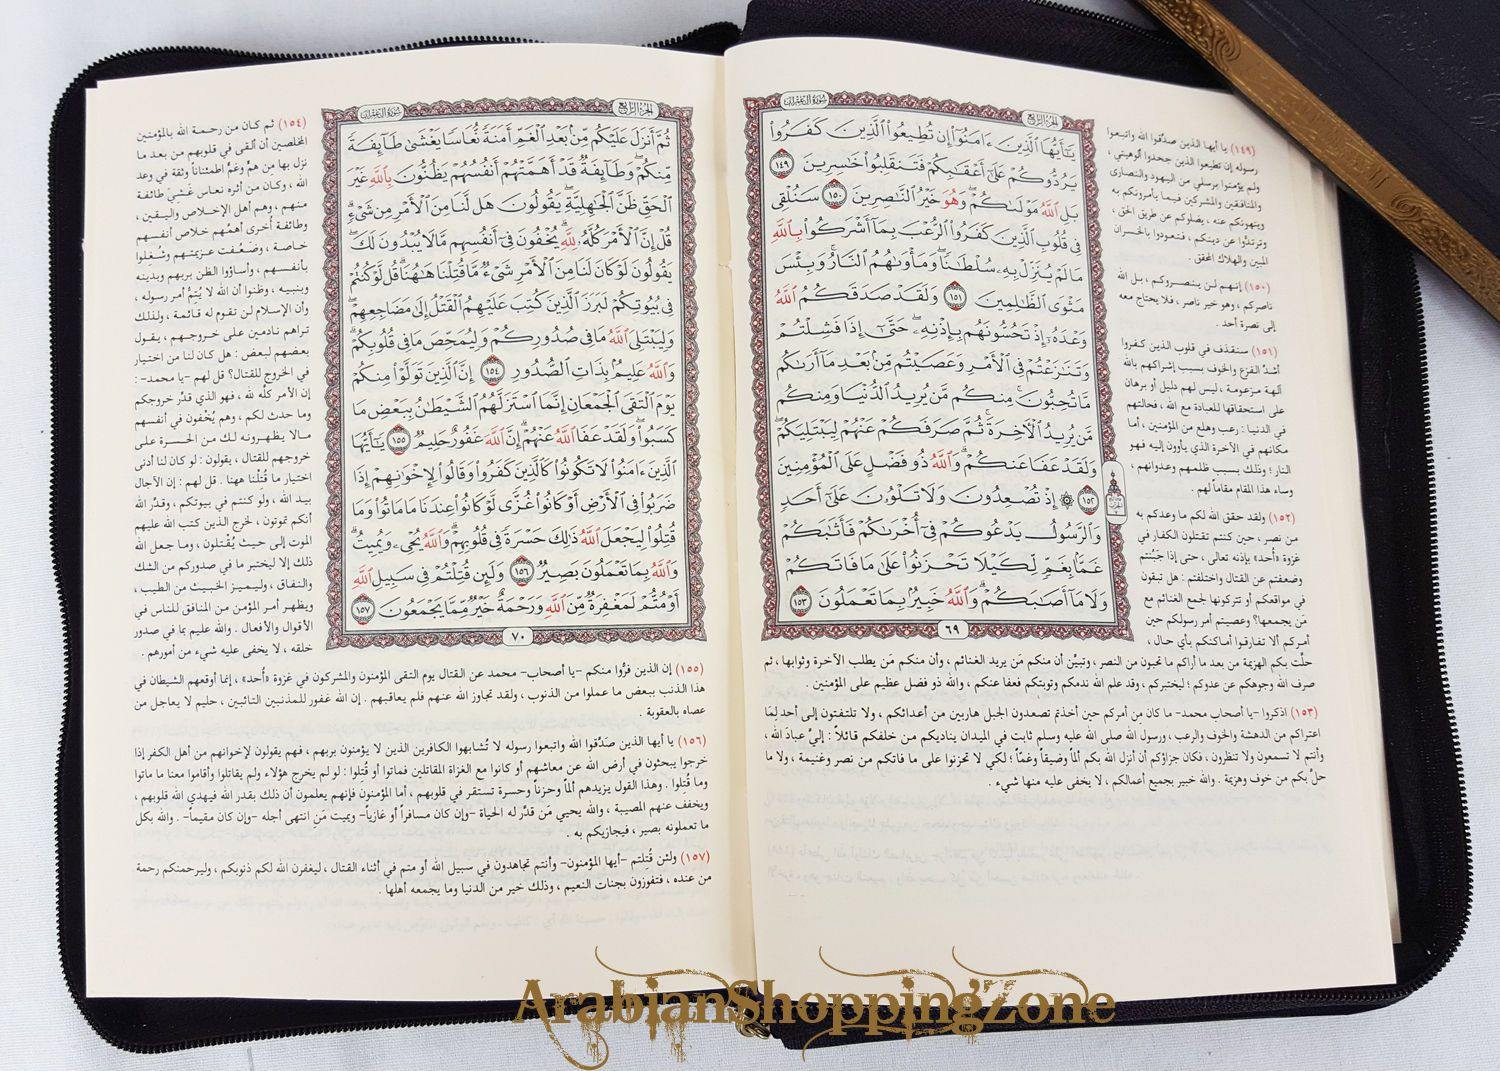 Interpretation of Quran Tafsir in Arabic Zipper Book size 20*14cm (8-5.7") - Arabian Shopping Zone